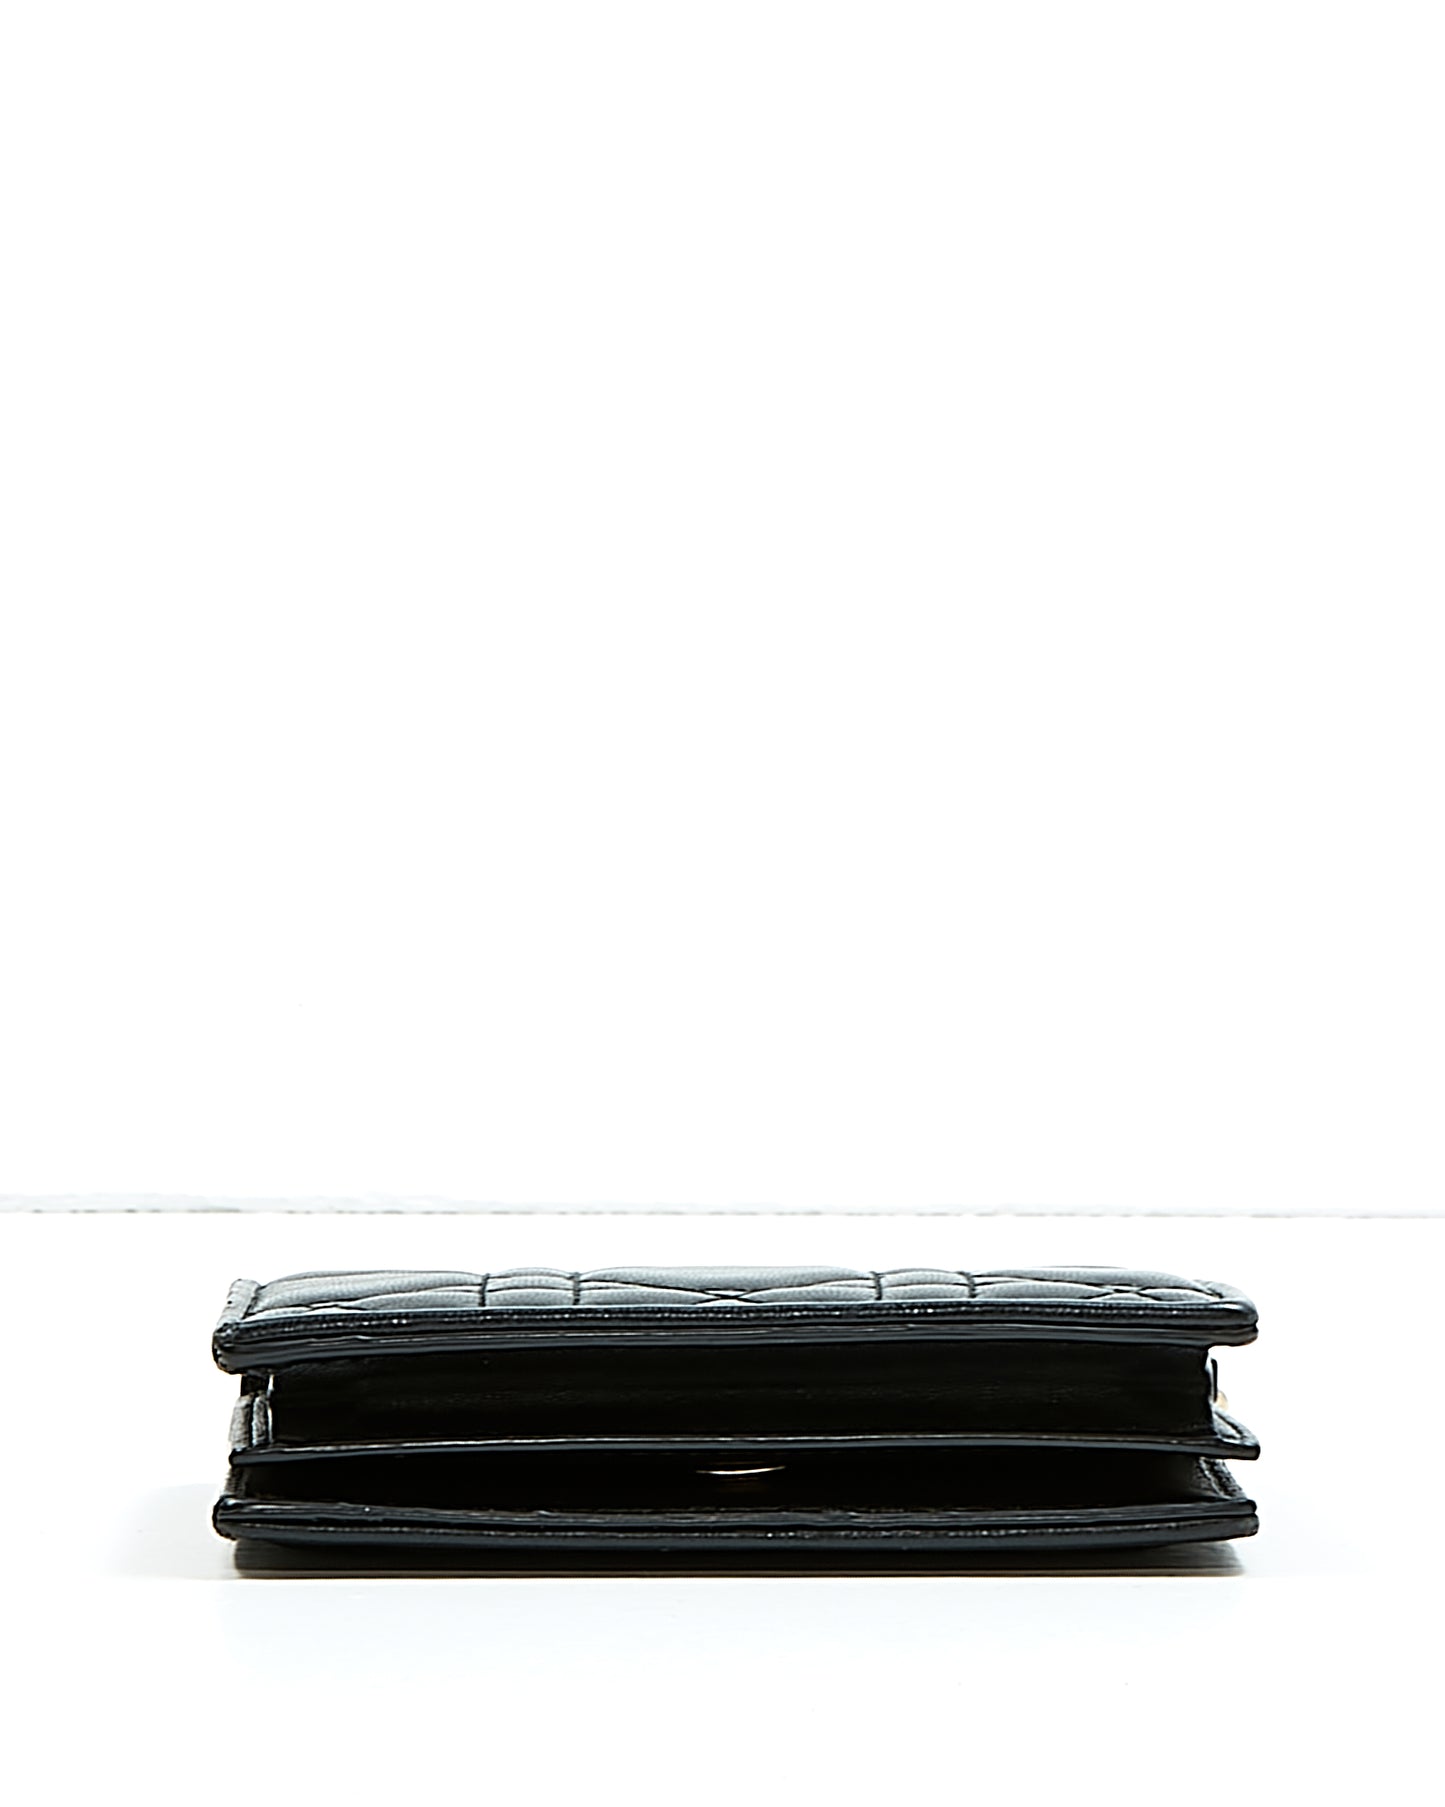 Mini portefeuille Cannage Lady Dior en cuir noir Dior